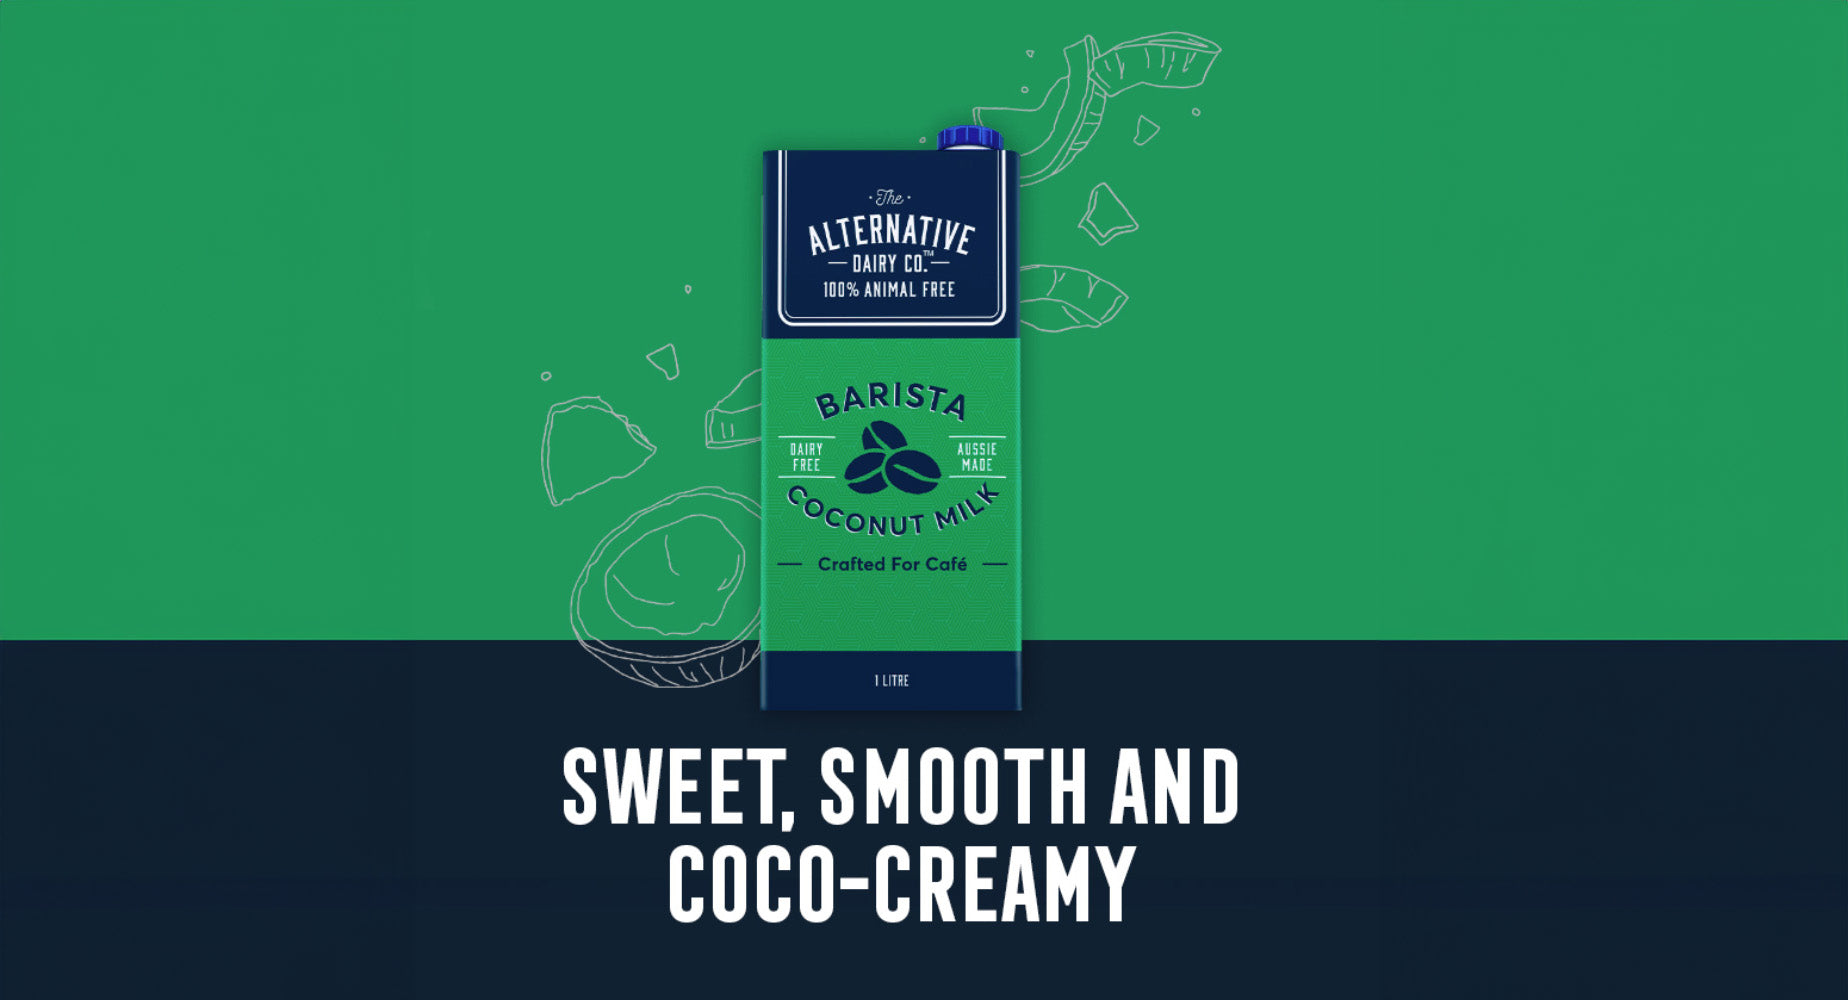 Alternative Dairy Co. Coconut Milk